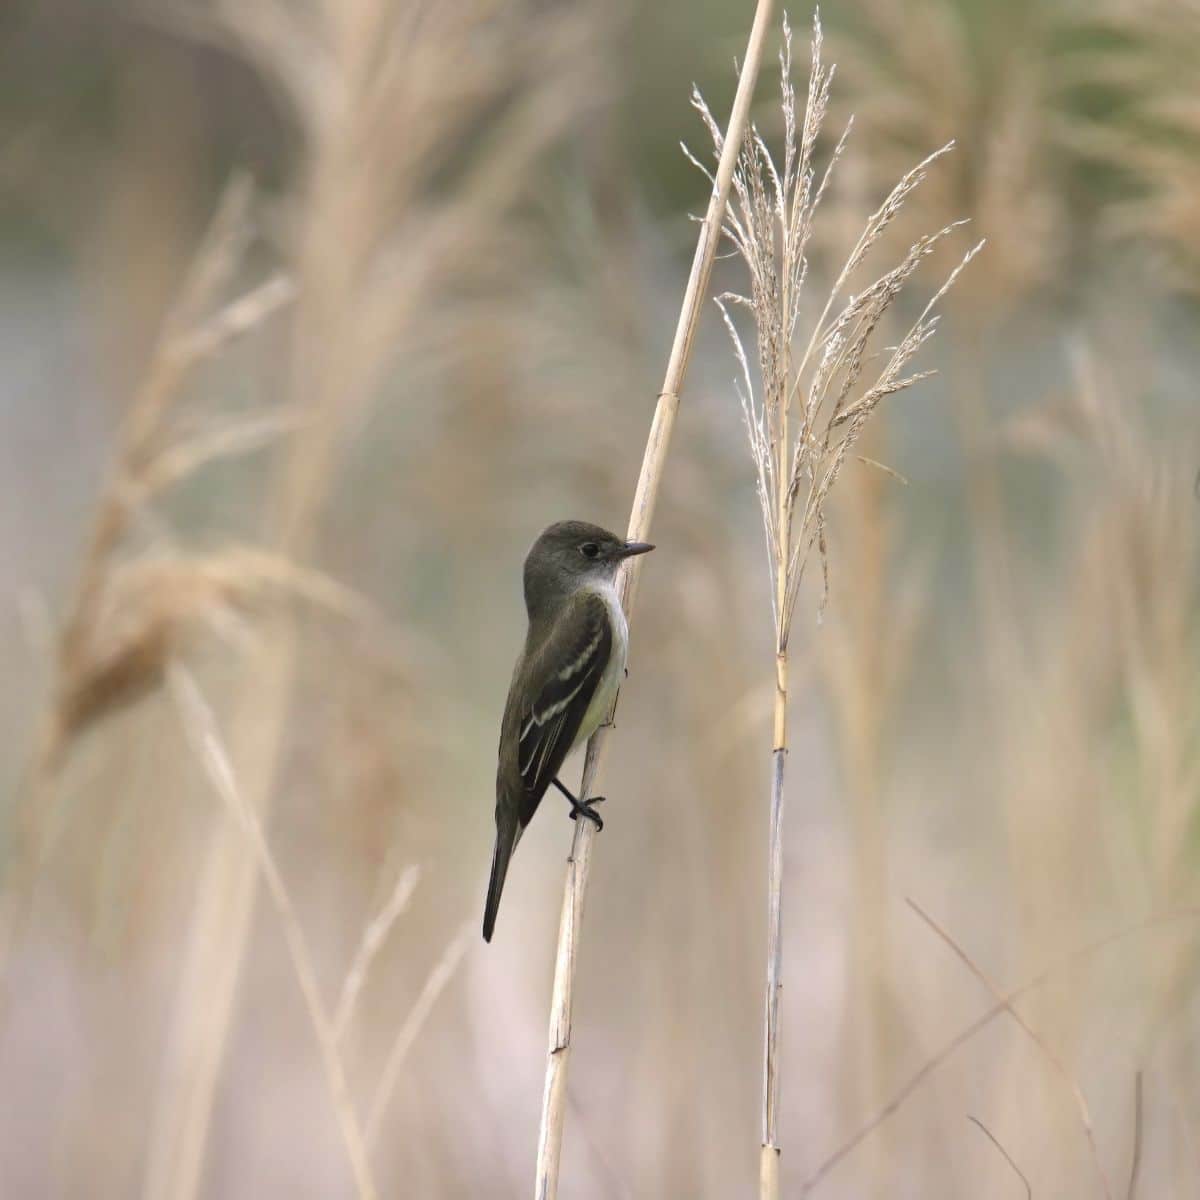 Willow flycatcher on grass stem